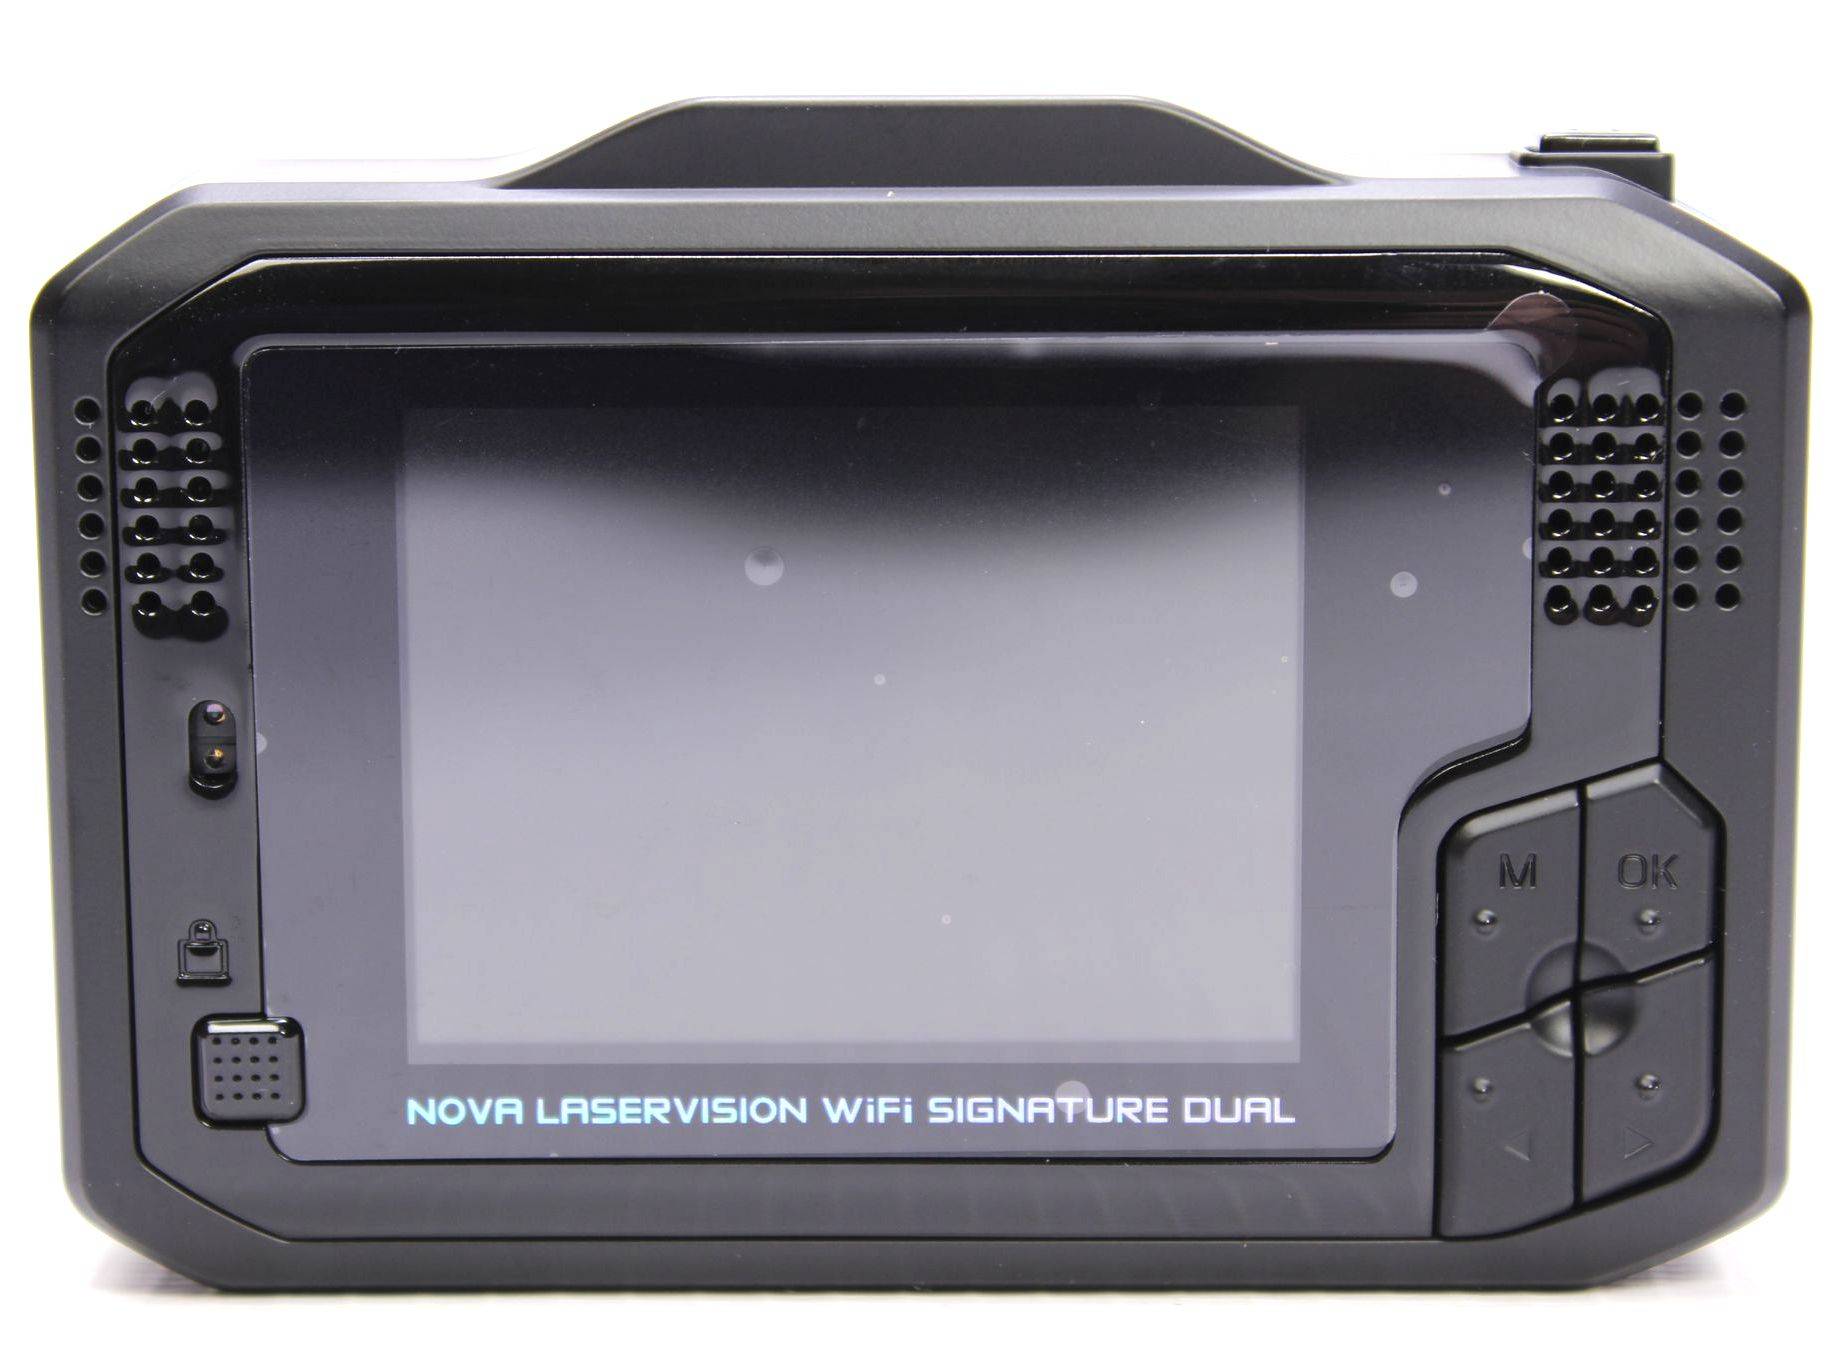 Ibox evo laservision wifi signature dual инструкция для видеорегистратора с радар-детектором